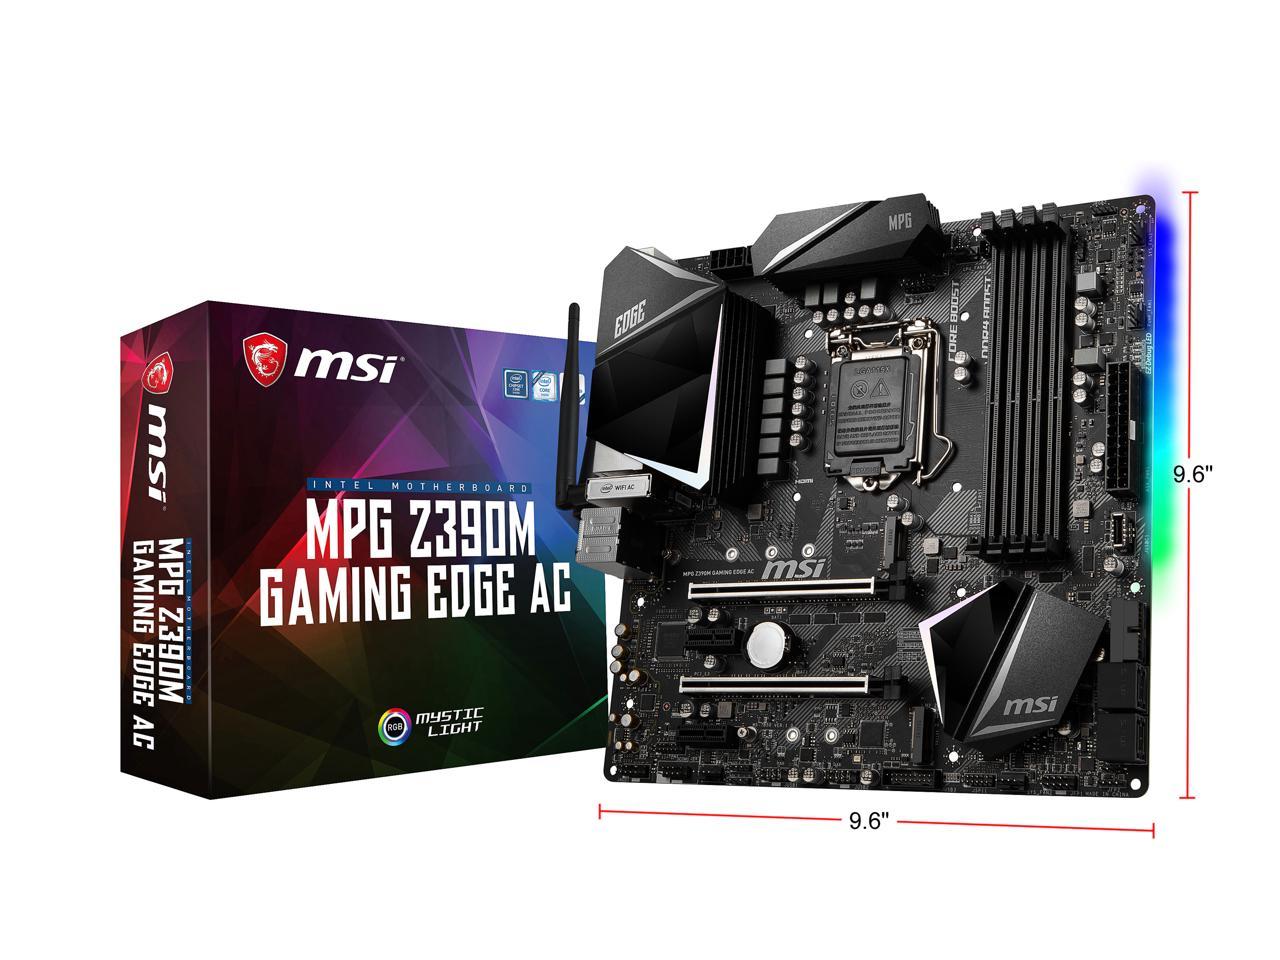 Msi Mpg Z390M Gaming Edge Ac Lga 1151 (300 Series) Intel Z390 Hdmi Sata 6Gb/S Usb 3.1 Micro Atx Intel Motherboard